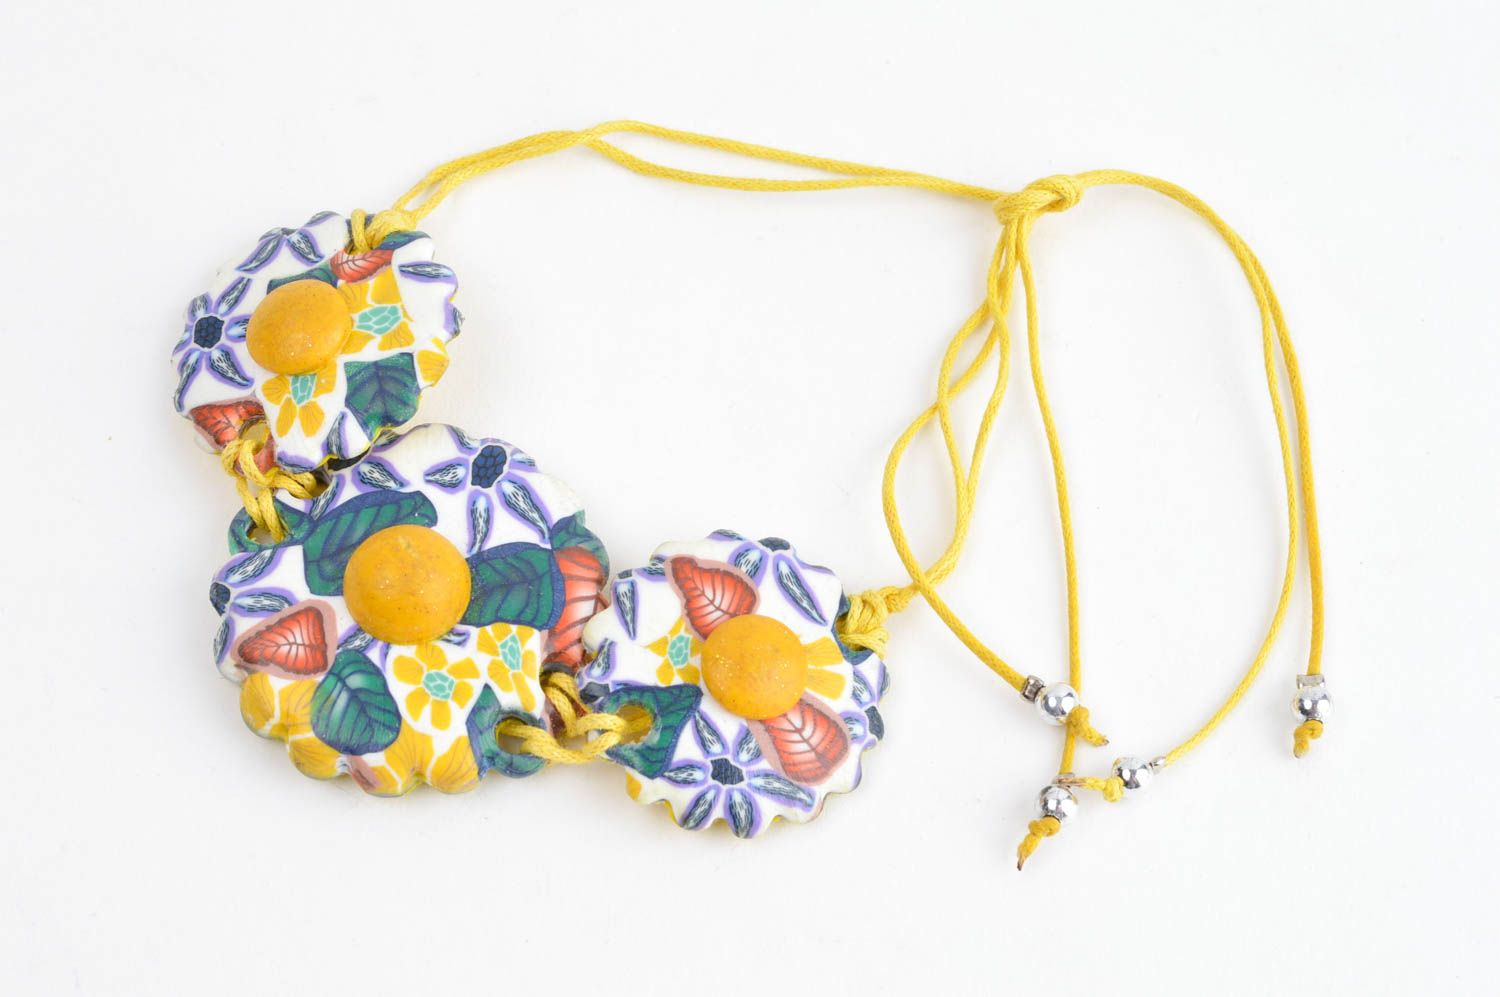 Bright handmade plastic bracelet wrist bracelet designs accessories for girls photo 3